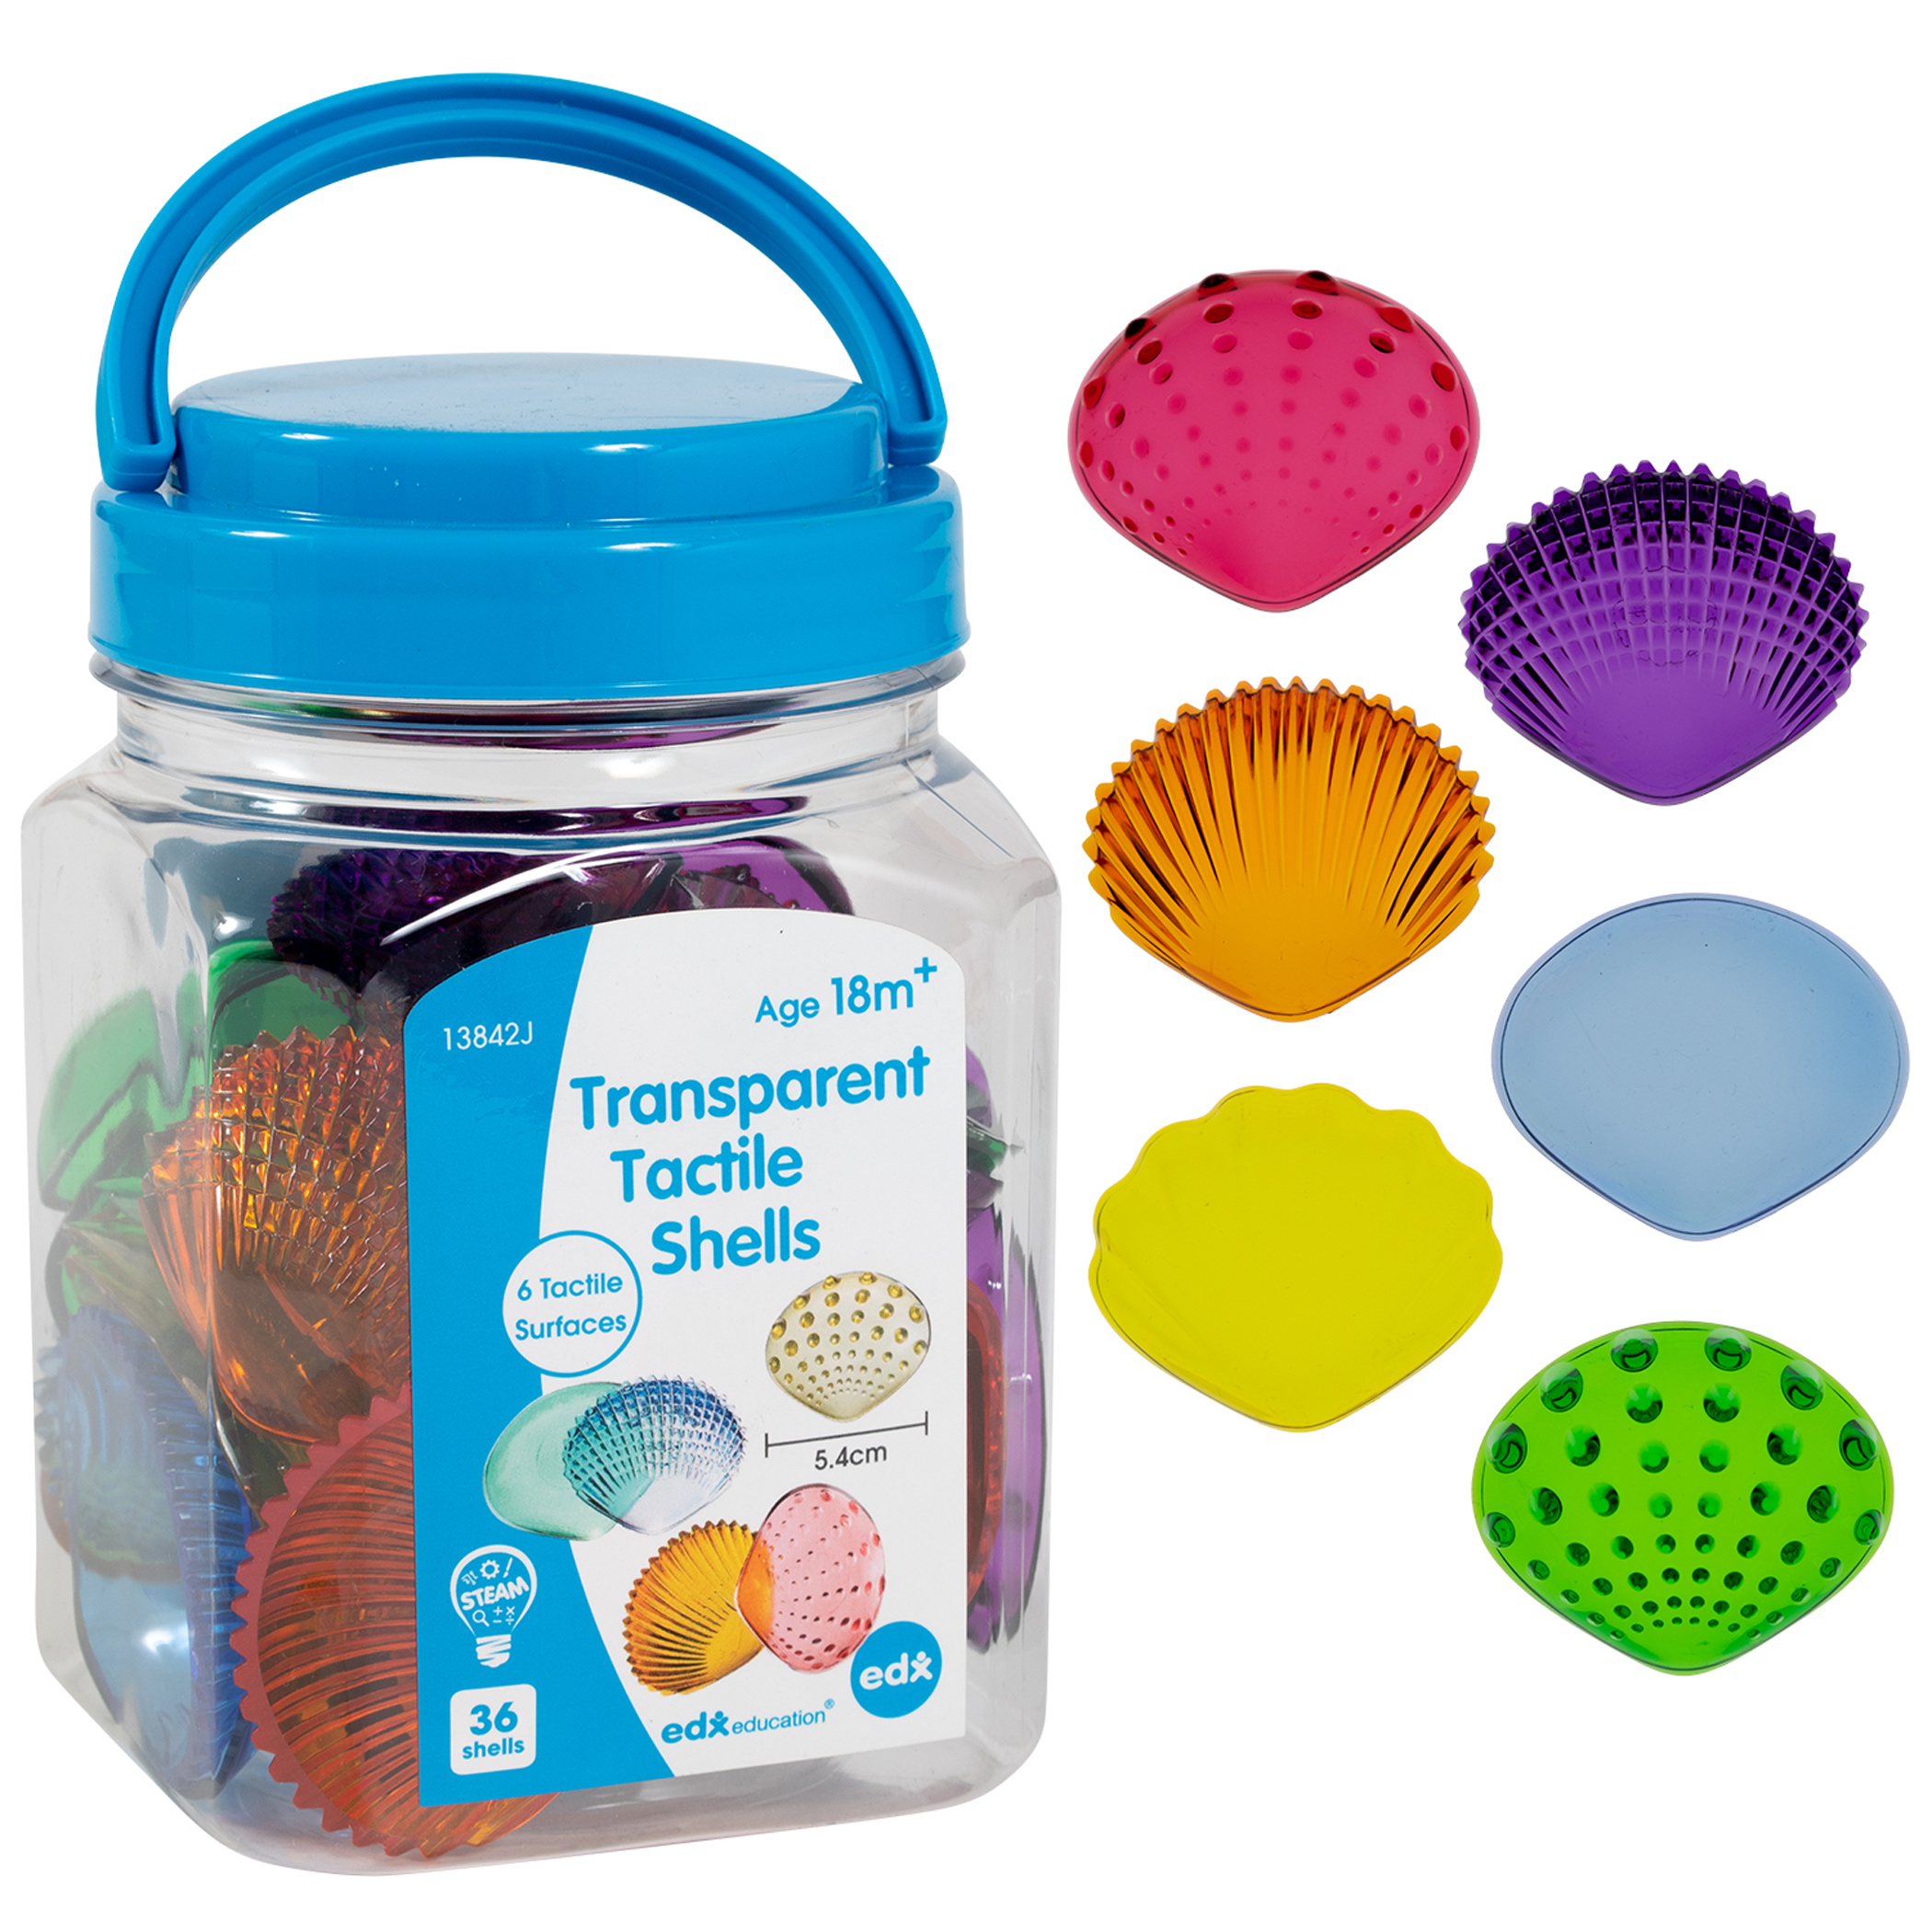 edxeducation Tactile Shells - Transparent - Mini Jar - Set of 36